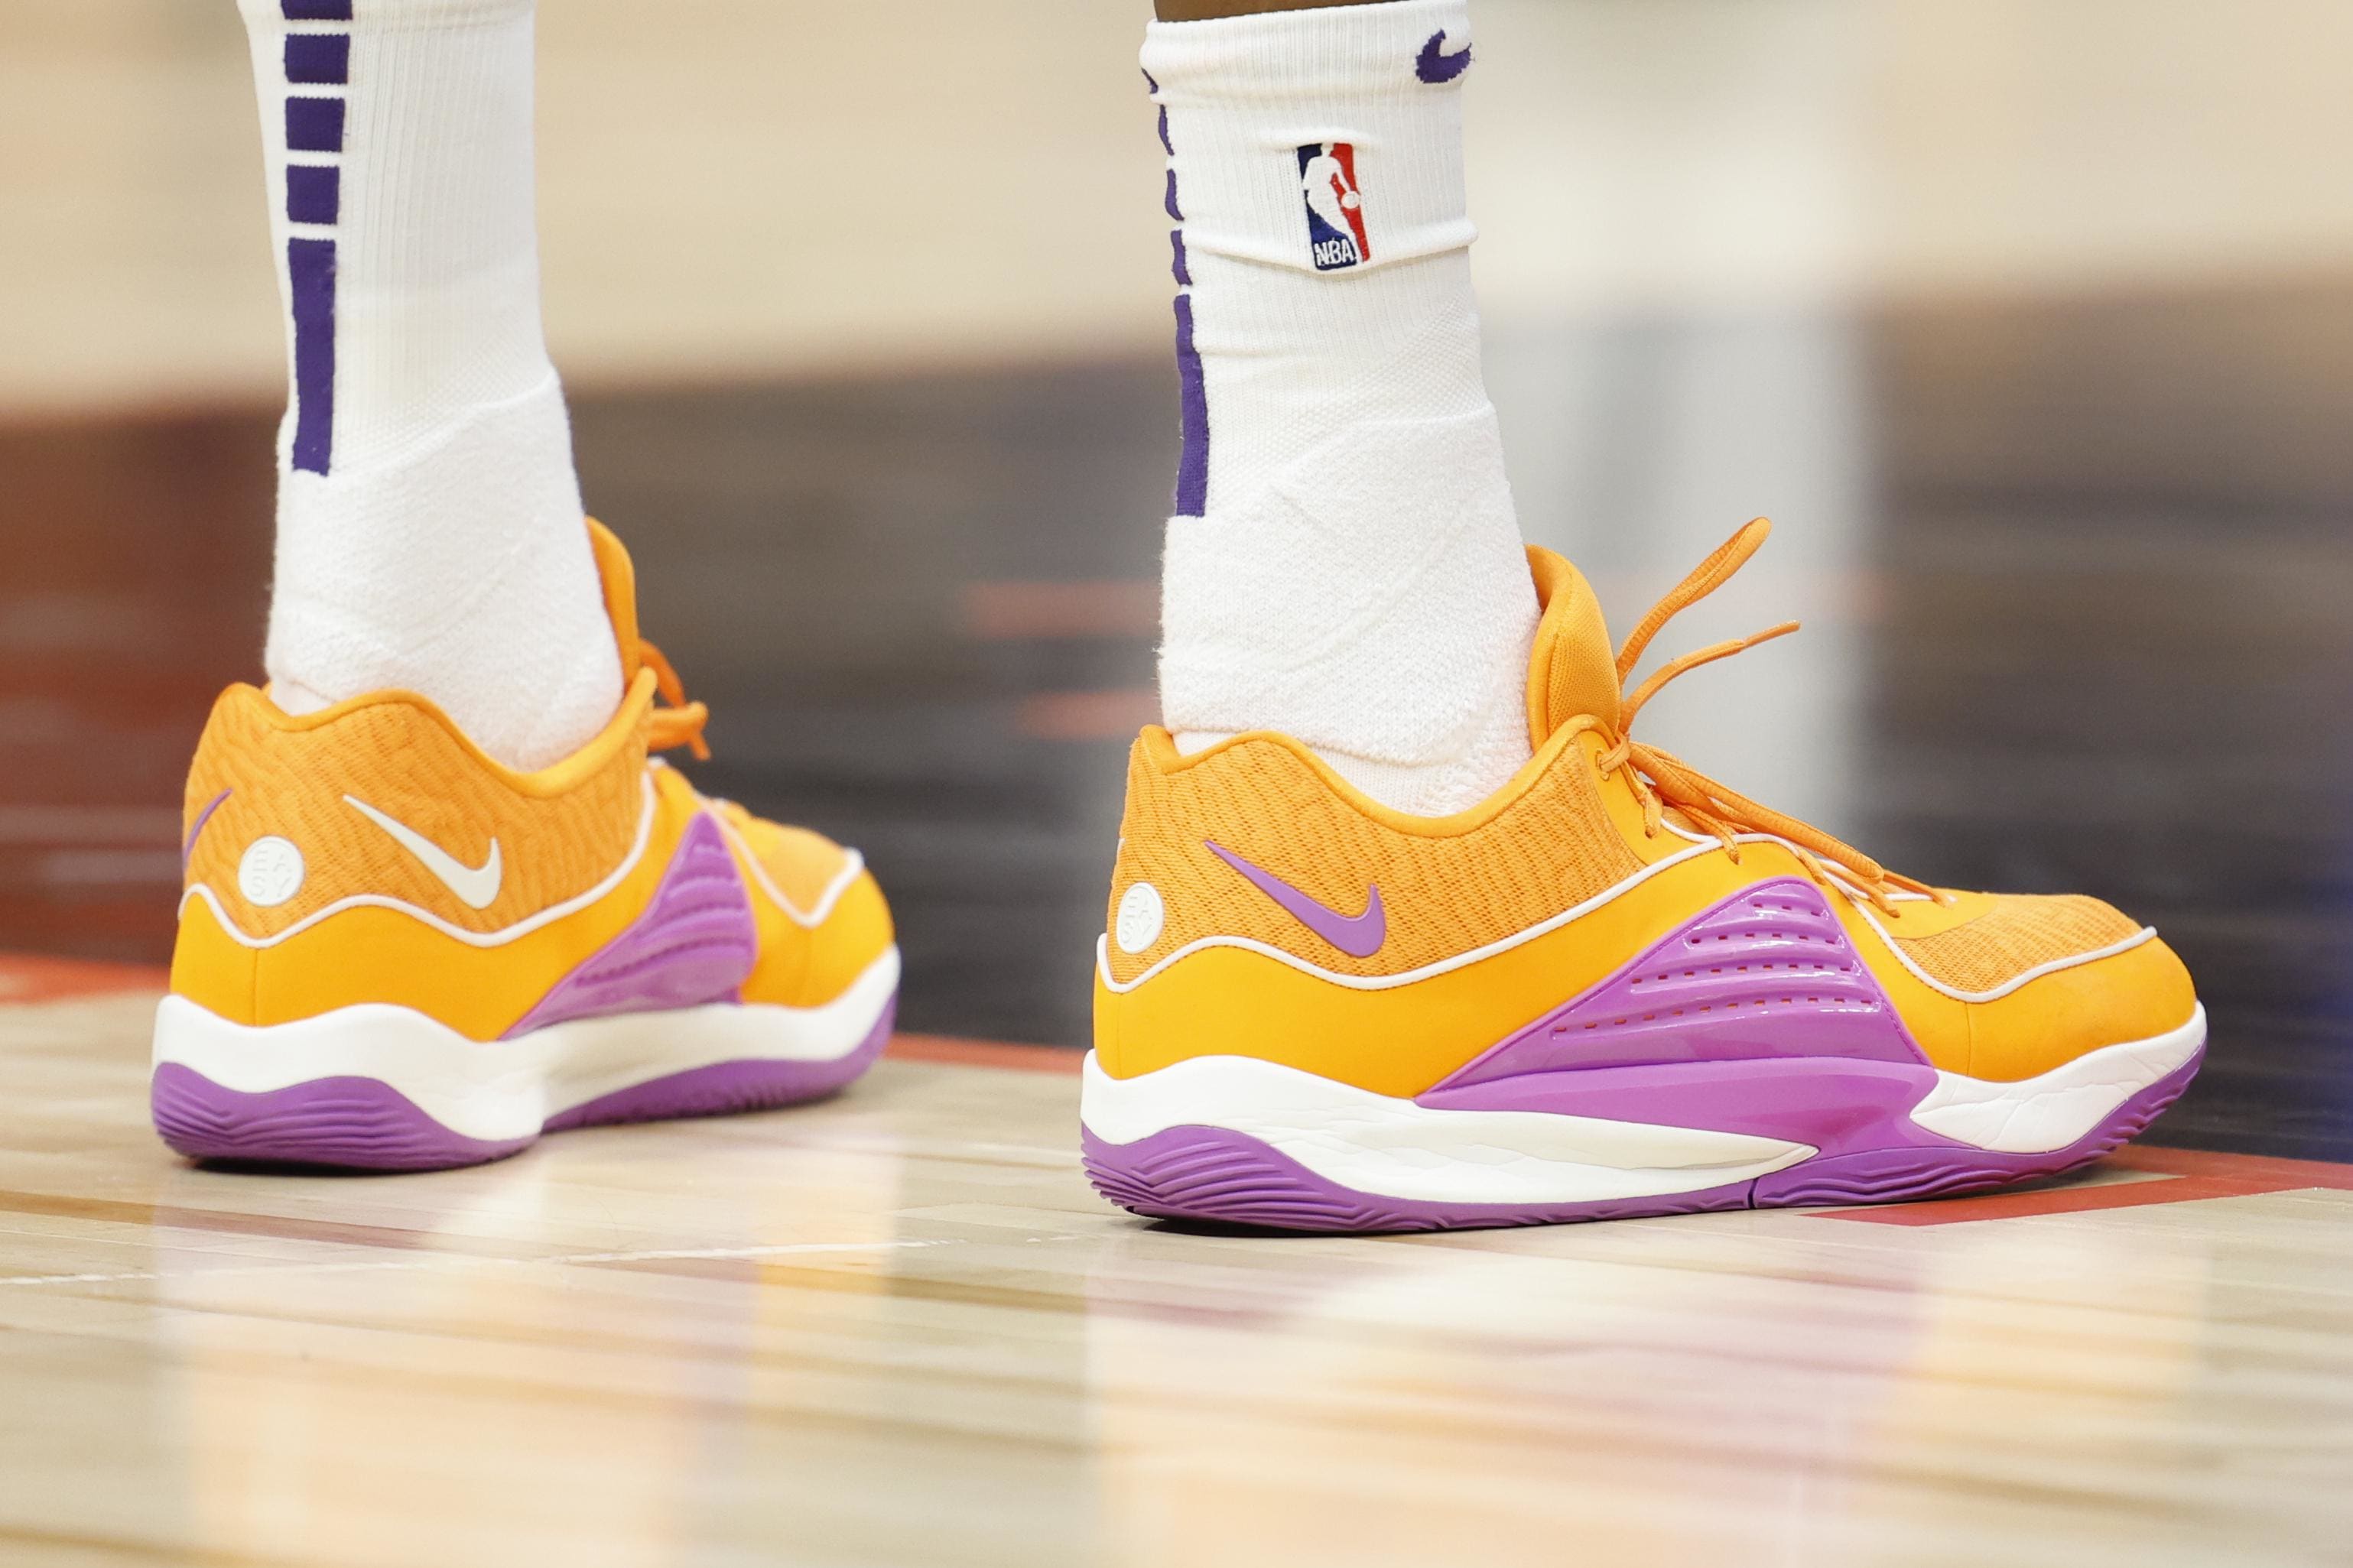 Phoenix Suns forward Kevin Durant wears orange and purple Nike sneakers.